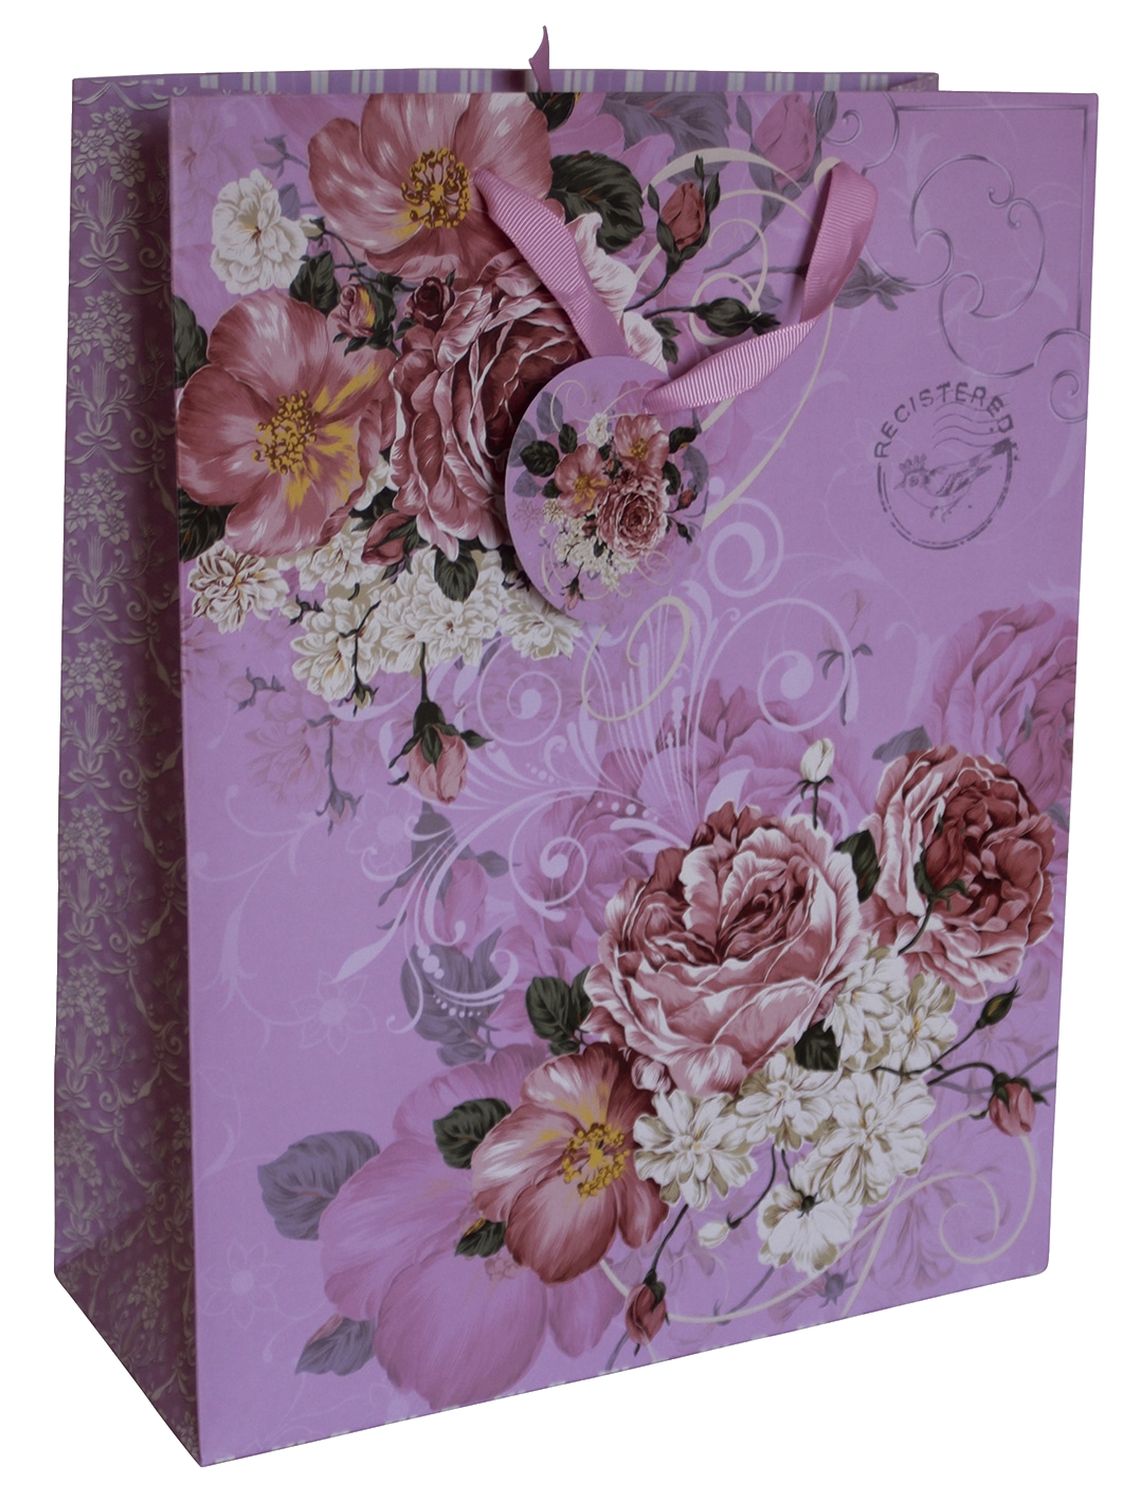 Geschenktragetasche Blume - 26 x 33 x 11 cm, rosa